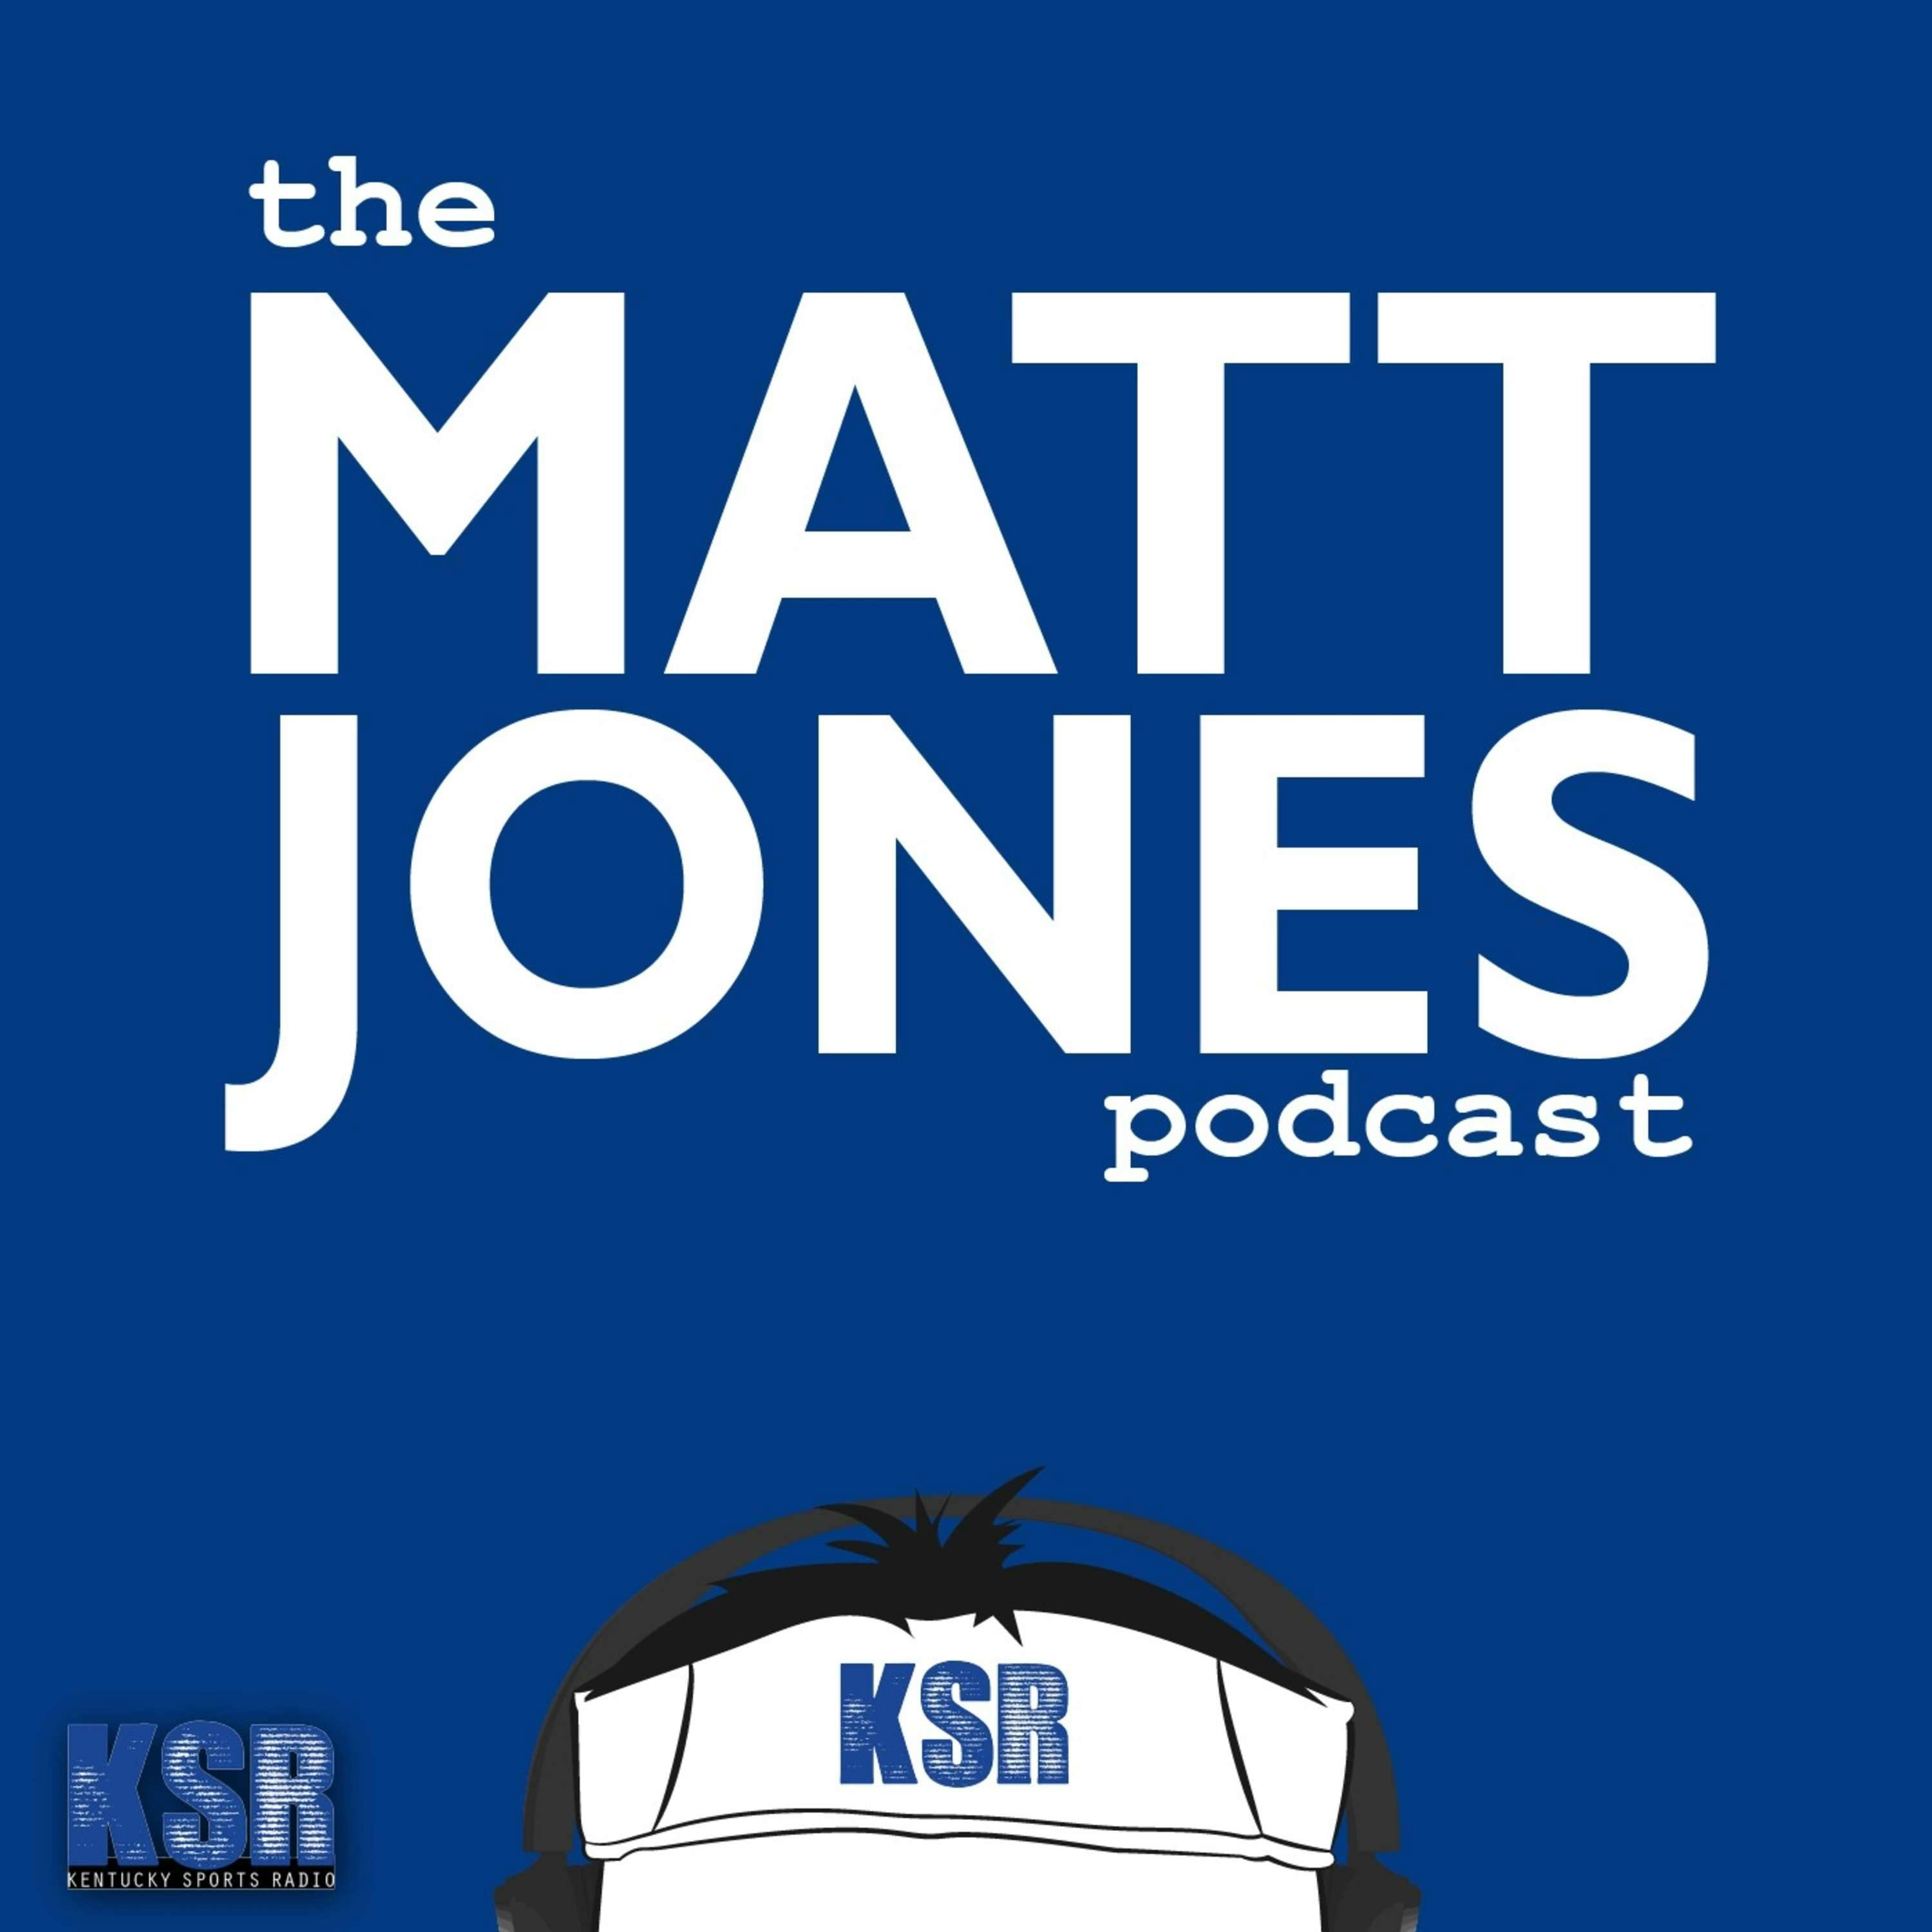 The Matt Jones Podcast: E42 NBA with Matt Moore & Tony Vanetti